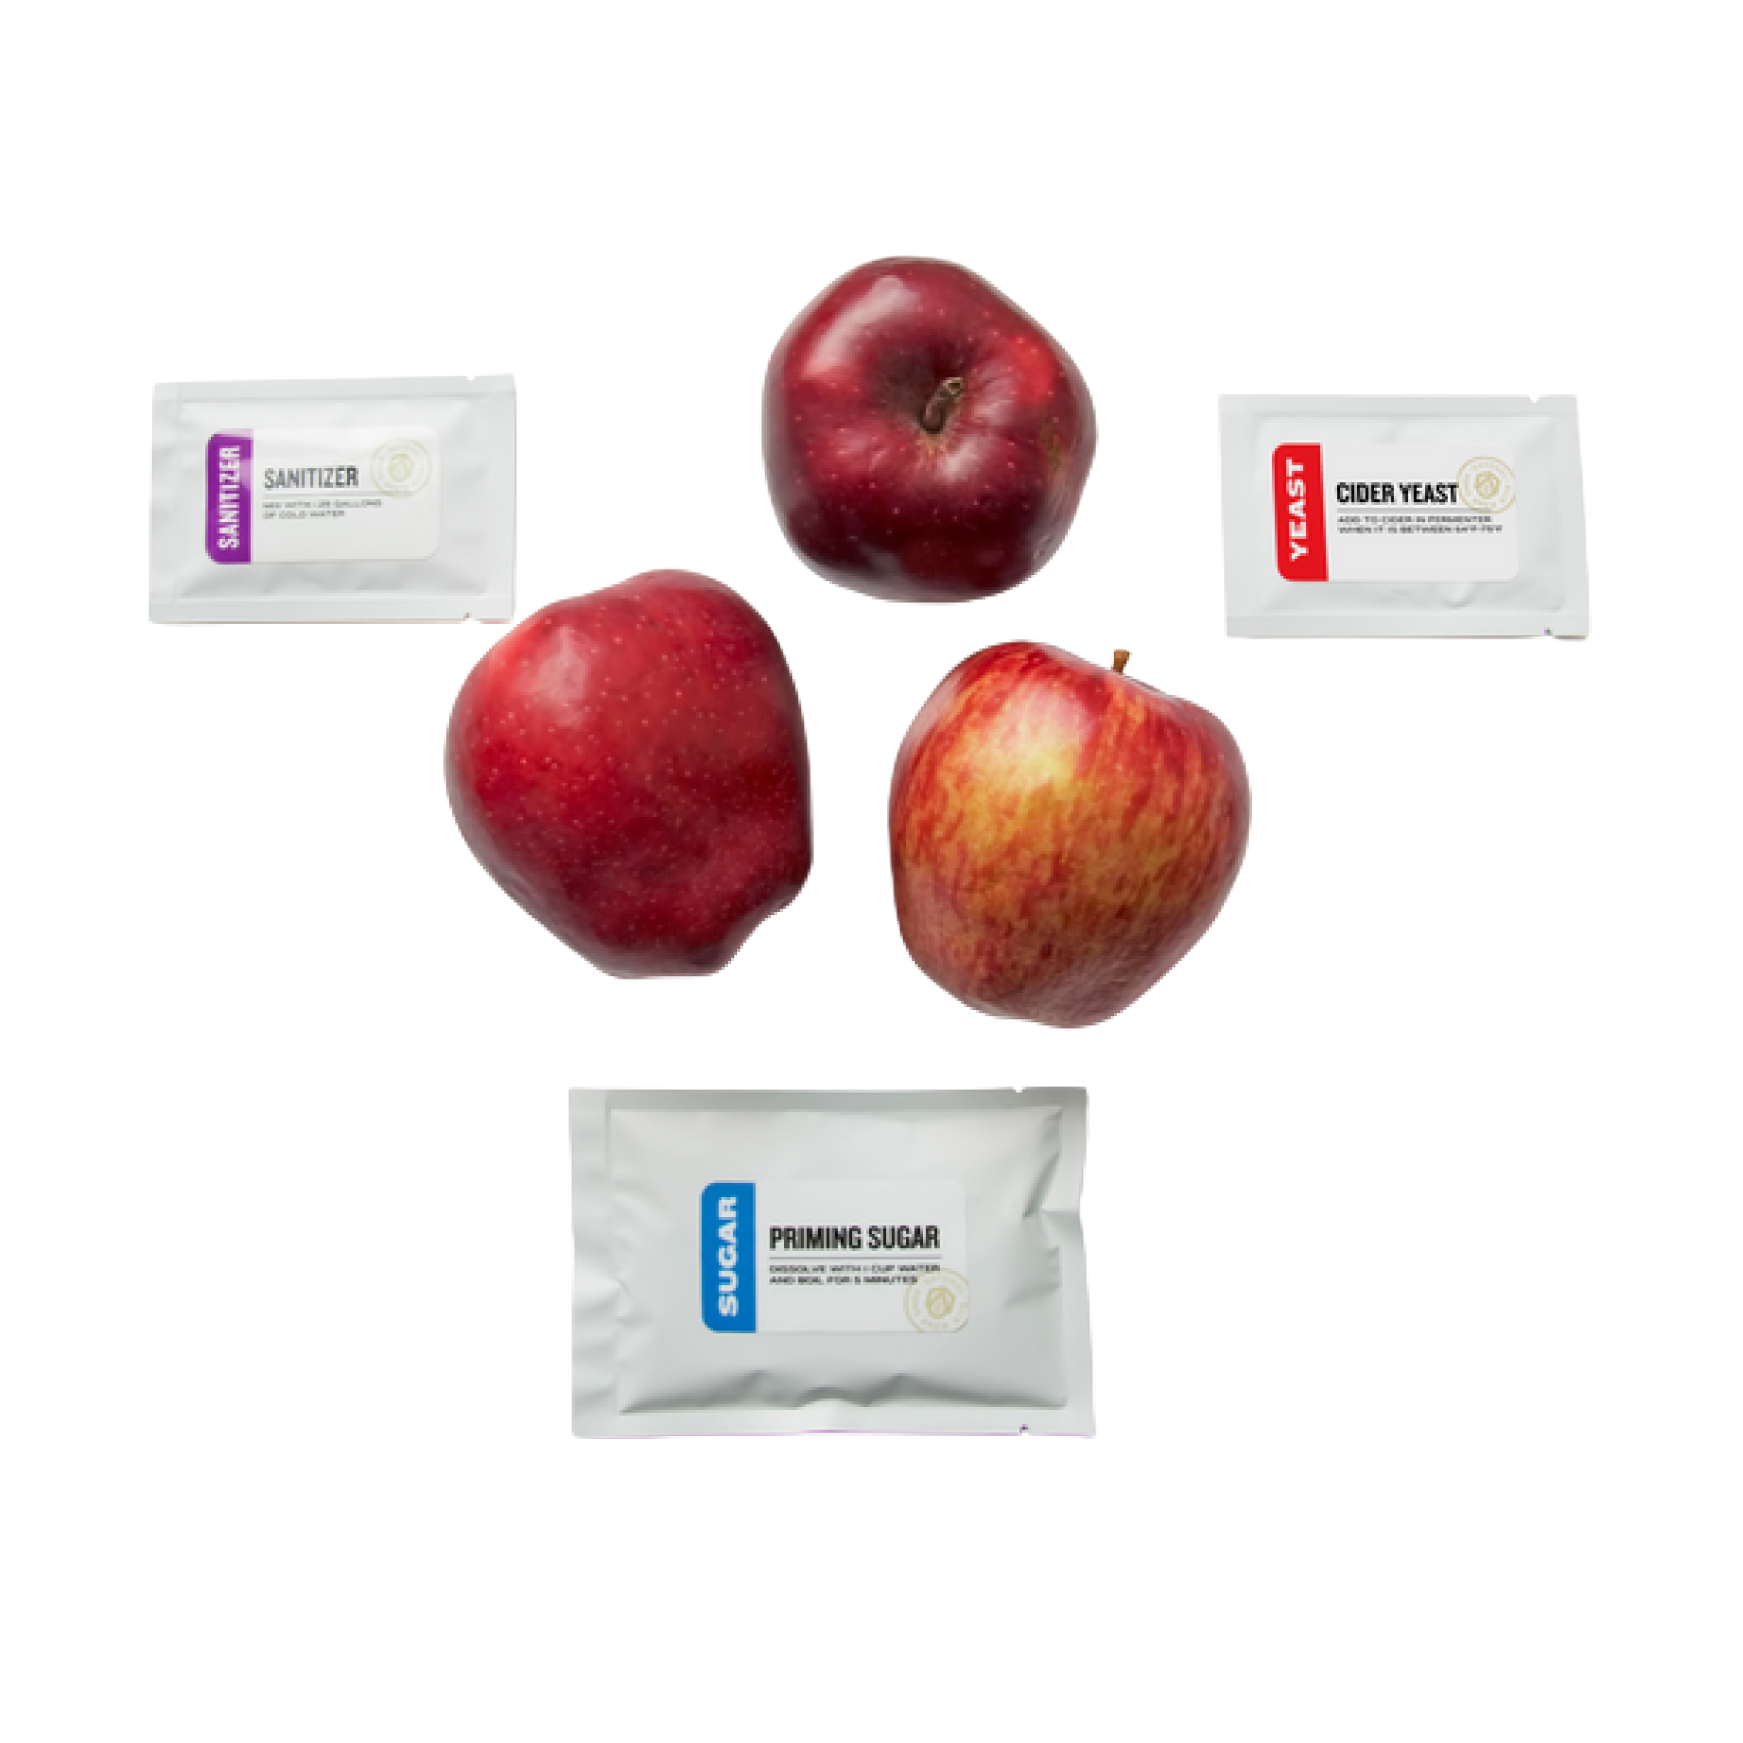 Milkshake IPA Ingredient Kit, ALL GRAIN, Fruit Optional - Keystone Homebrew  Supply